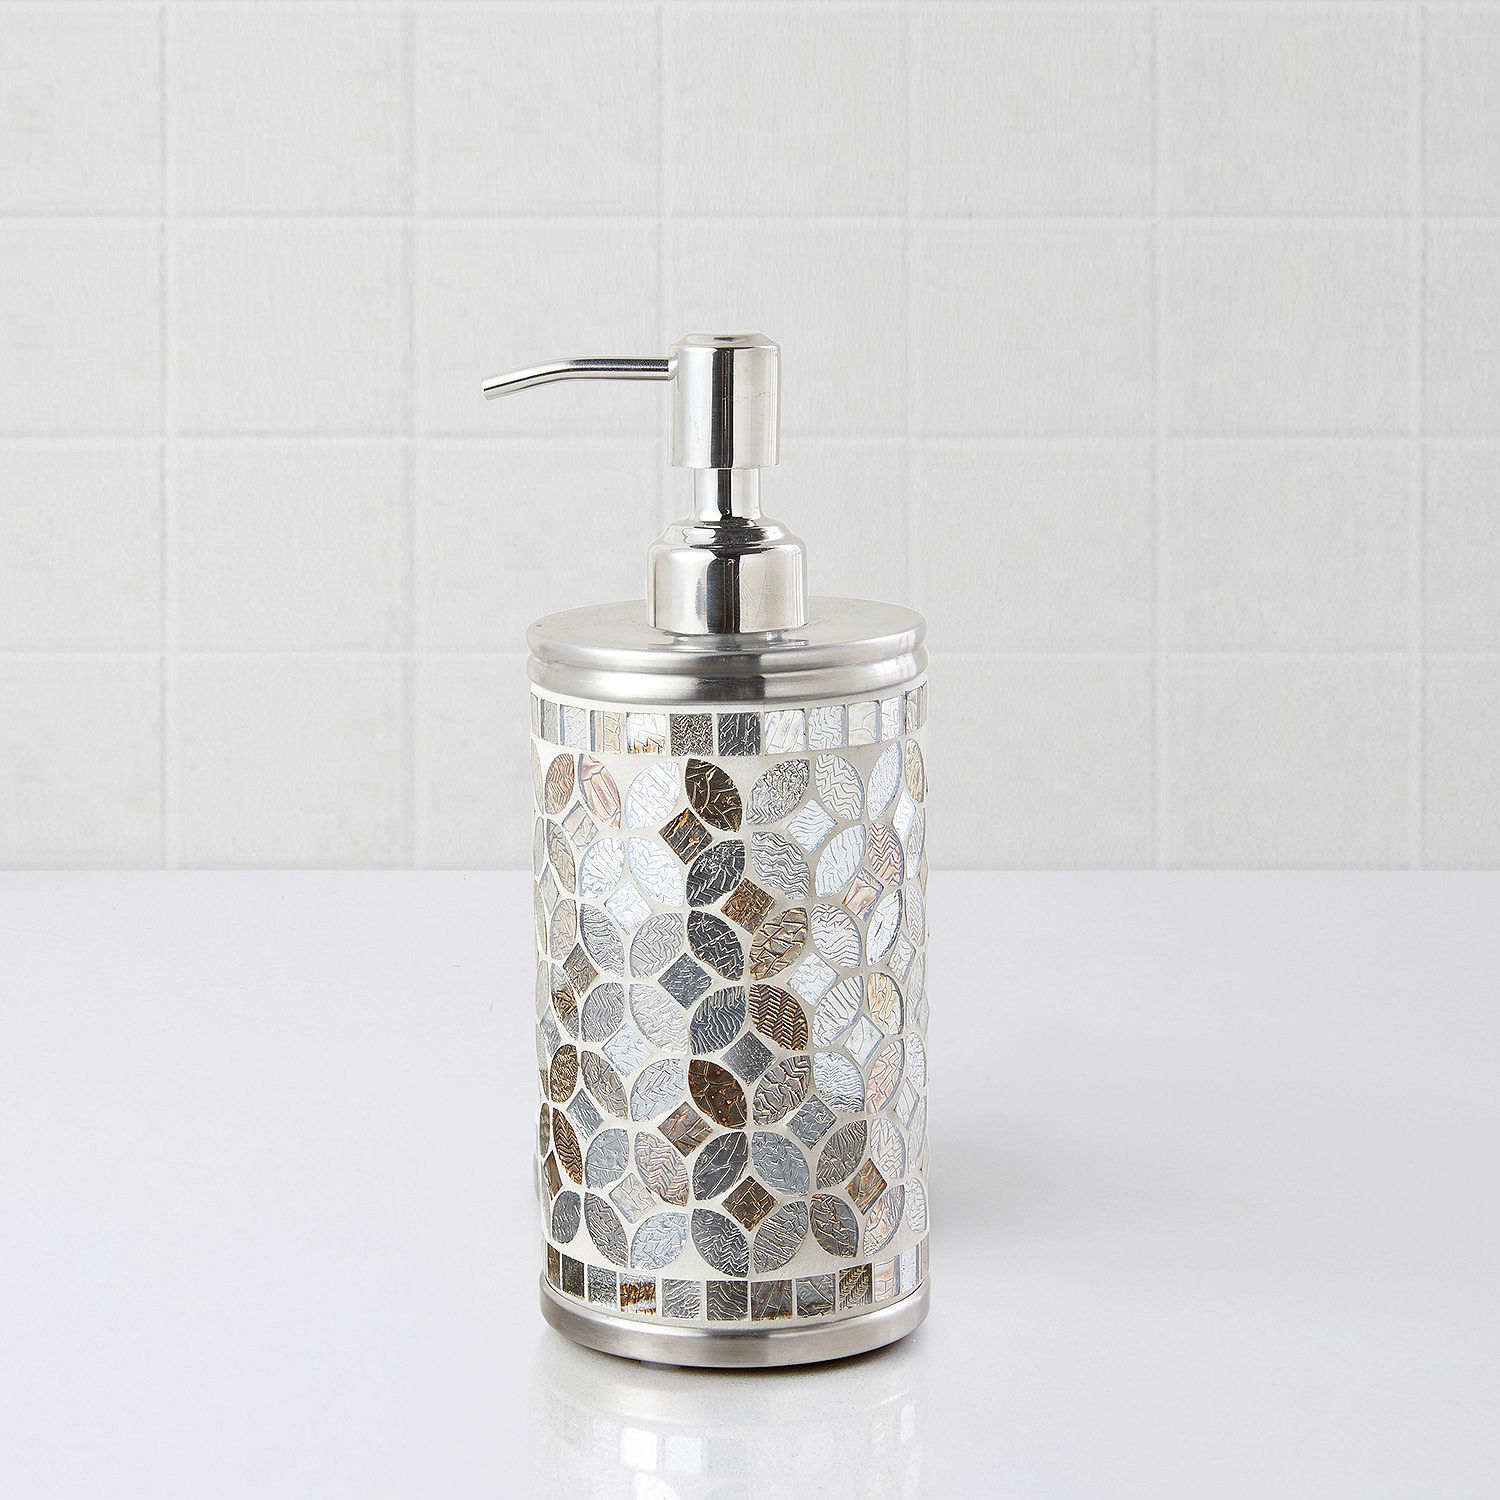 Croscill Seville Soap Dispenser, Color: Silver - JCPenney